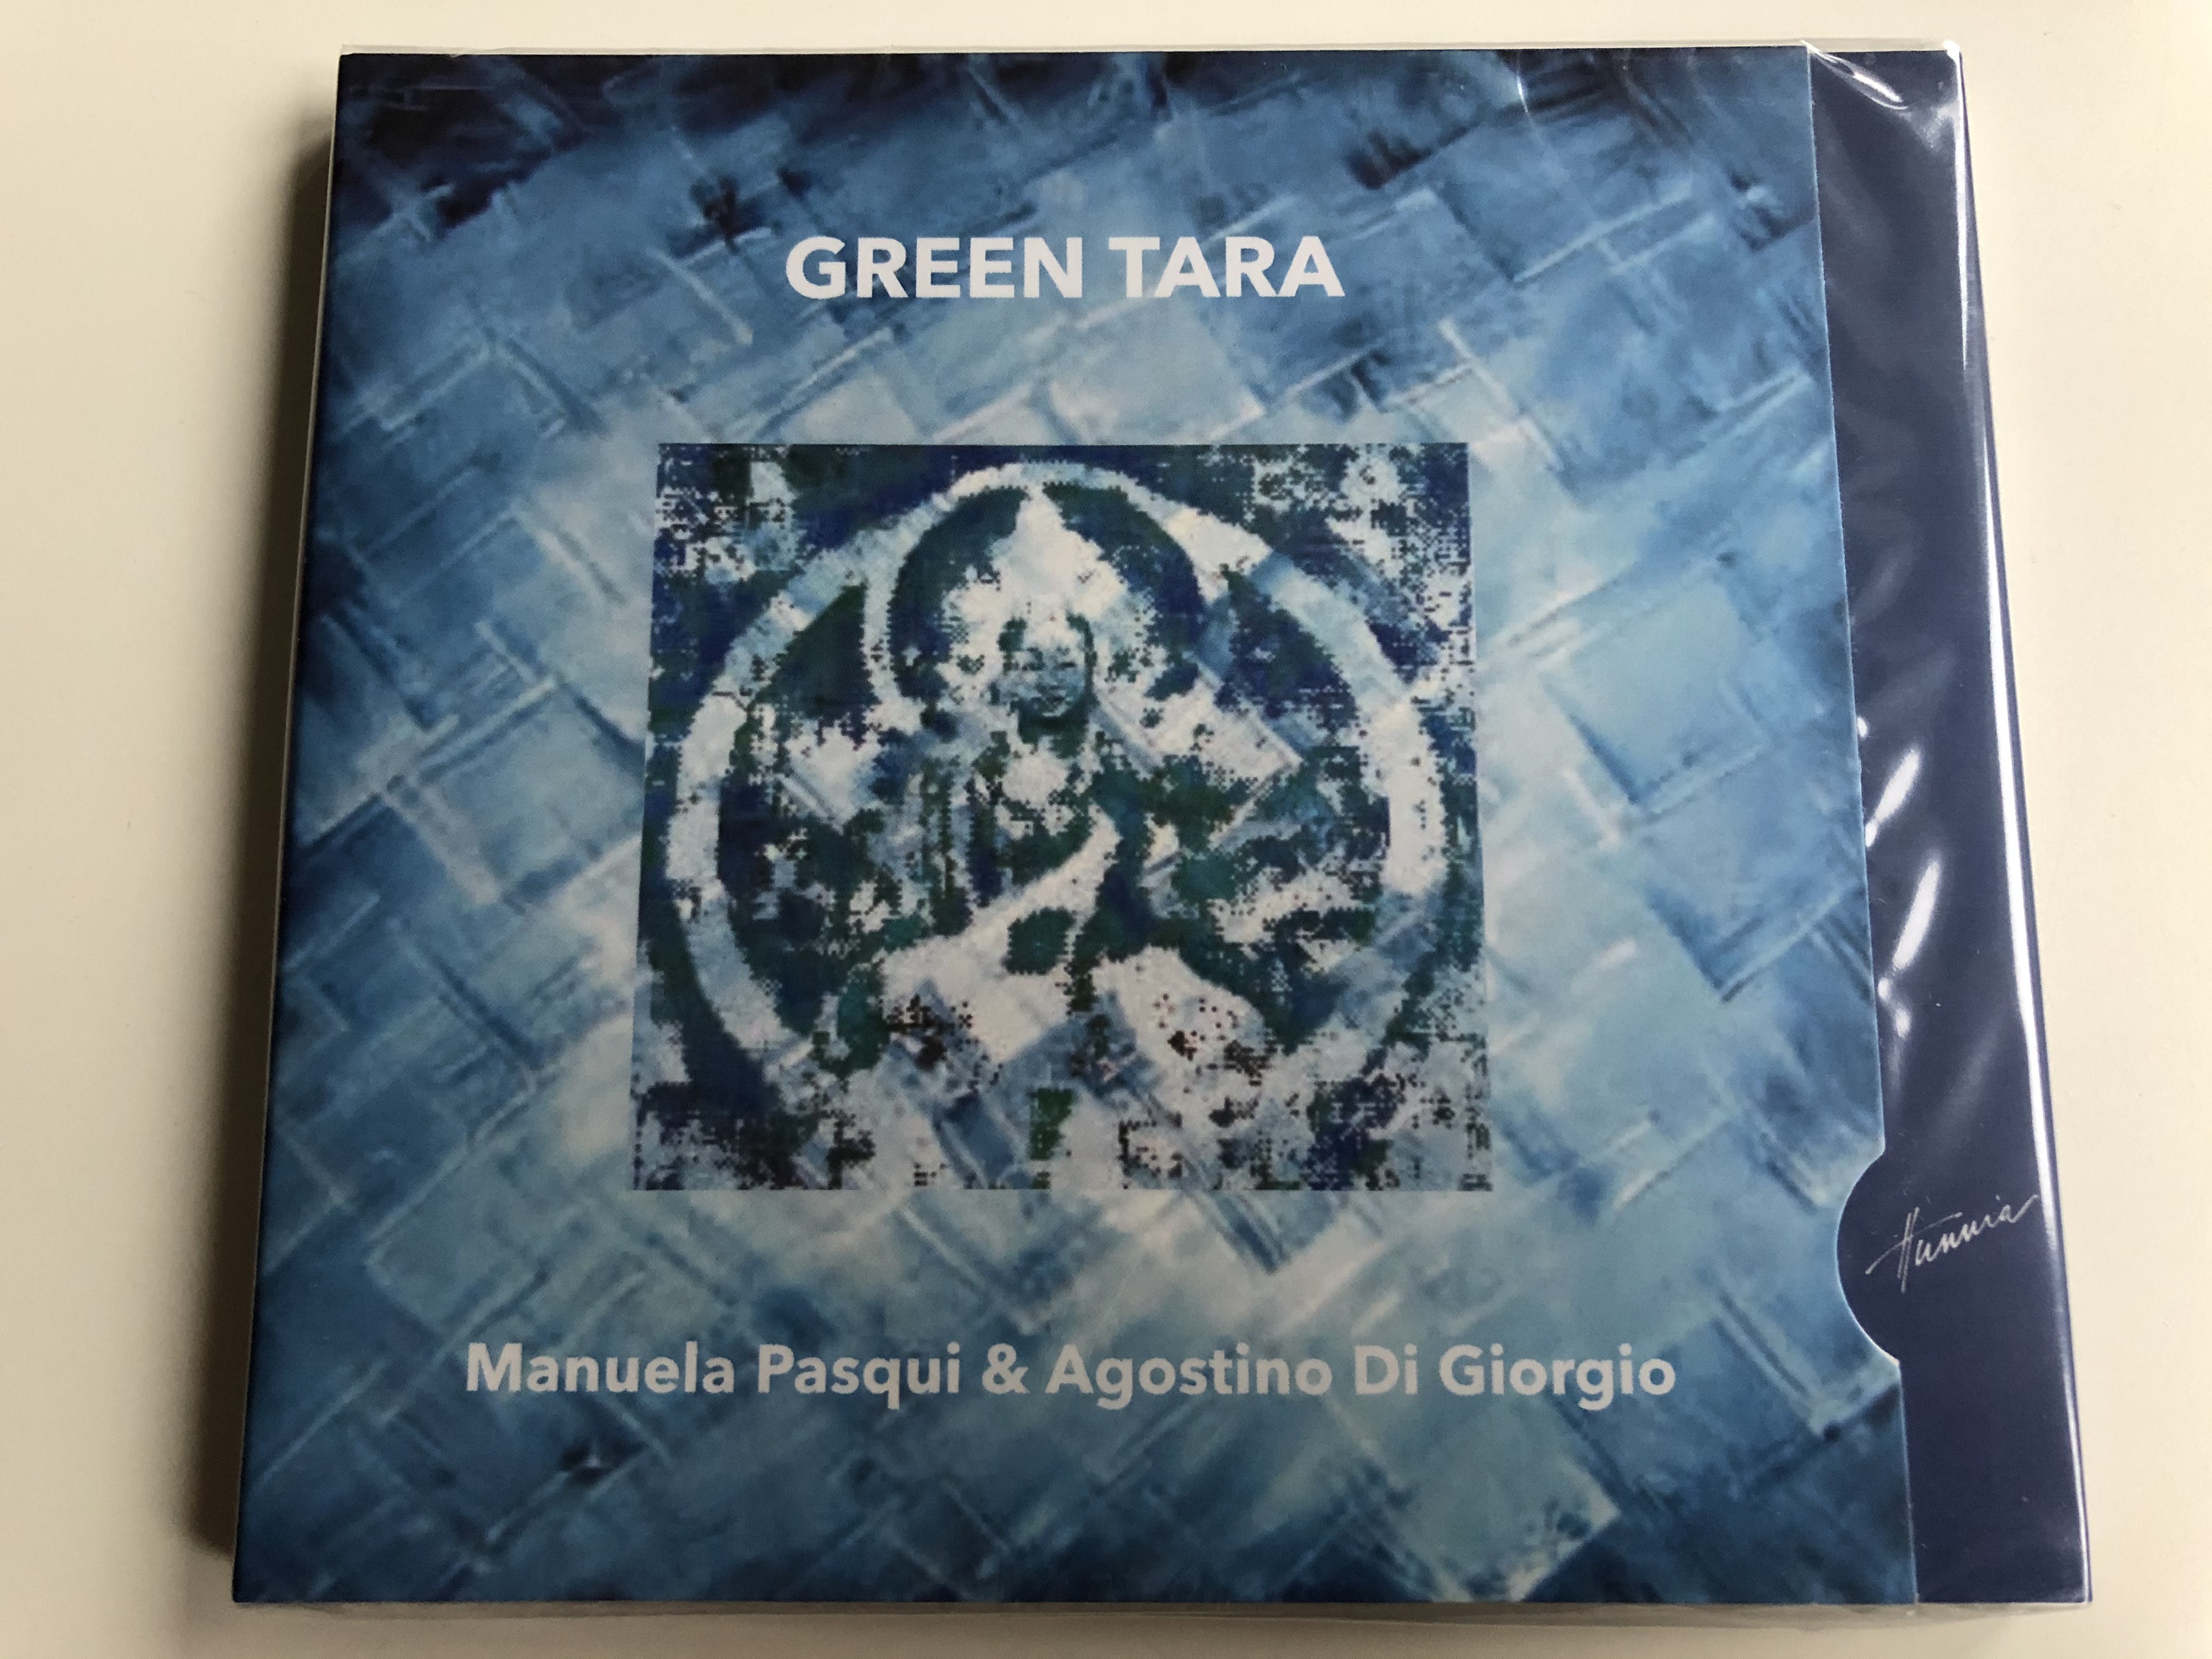 green-tara-manuela-pasqui-agostino-di-giorgio-hunnia-records-film-production-audio-cd-2018-hrcd1807-1-.jpg